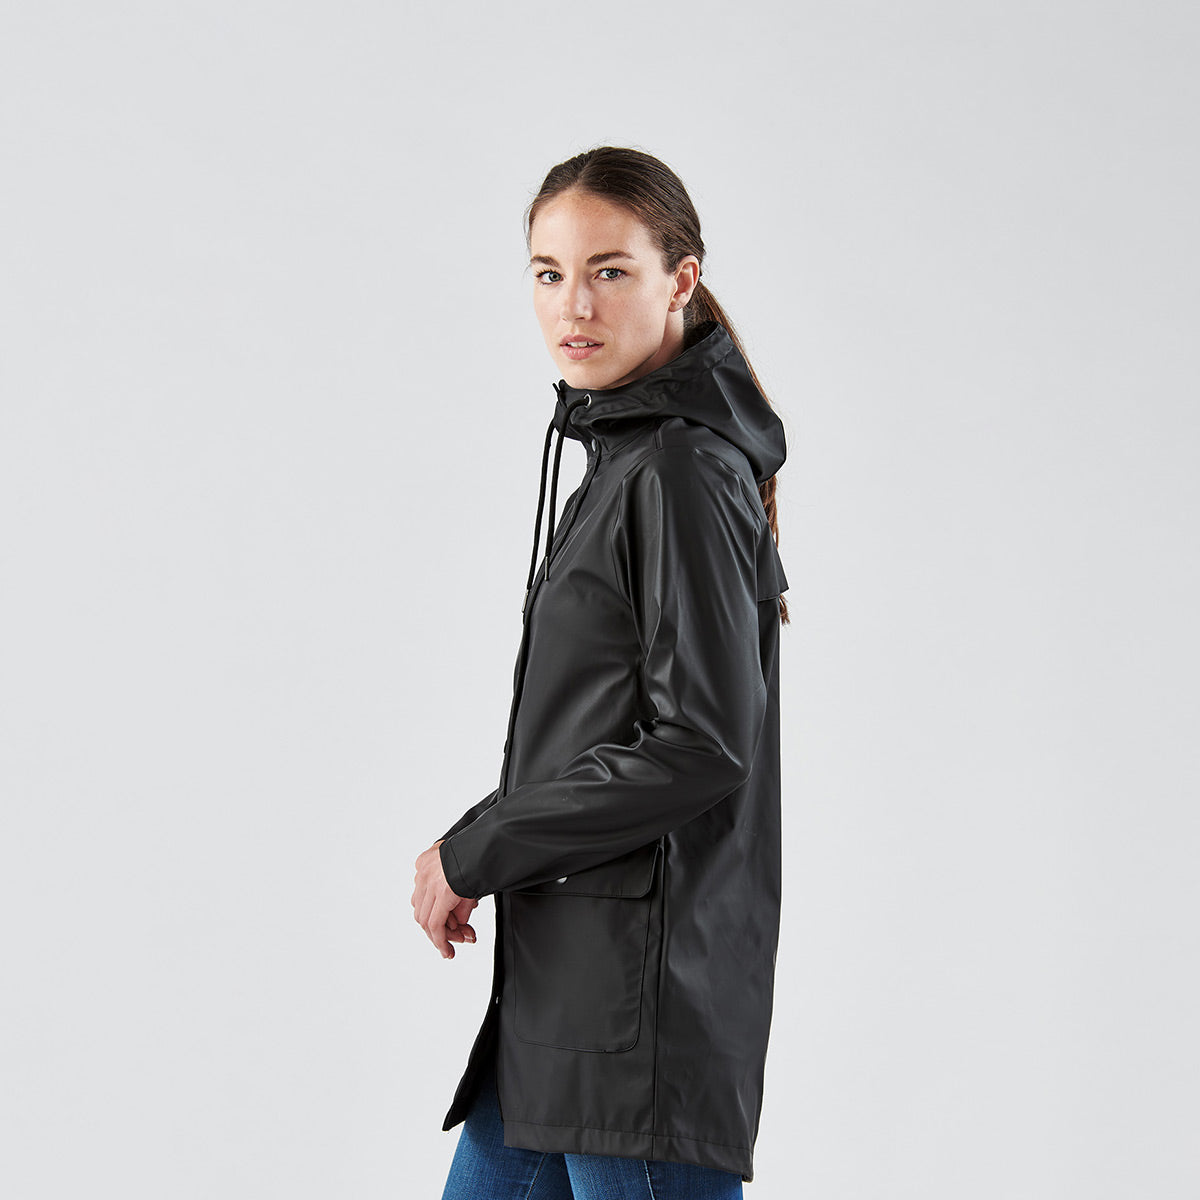 Buy Viaterra P300 – Motorcycle Rain Jacket / Rain Coat for Riders Online at  Best Price from Riders Junction